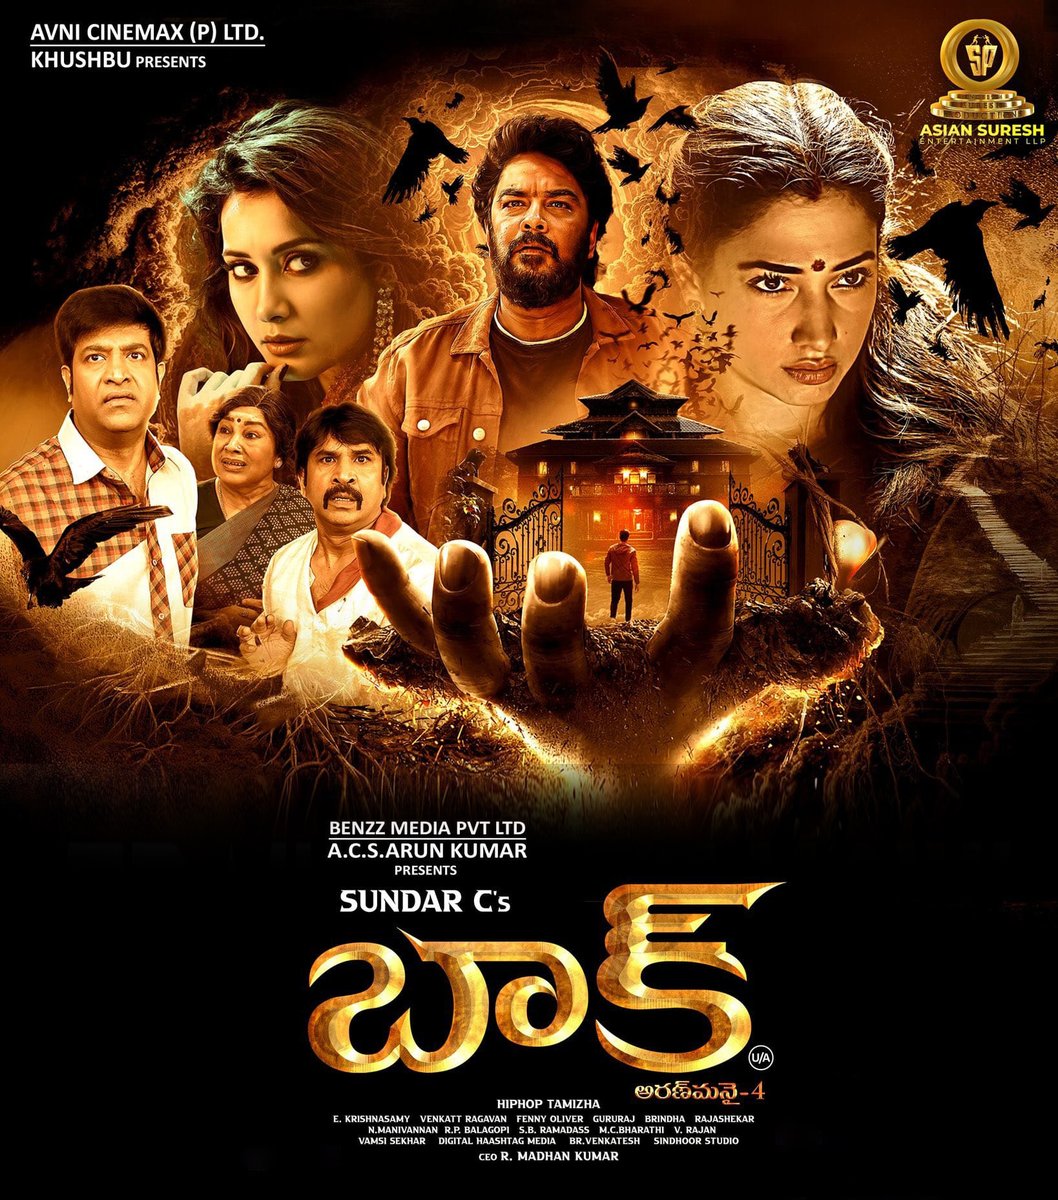 #BAAK 🦇IN CINEMAS FROM MAY 3rd 🎥
A Film by #SundarC A #HipHopTamizha Musical 🎶
#Aranmanai4 #Tamannaah #RaashiKhanna #ActorSanthosh #VennelaKishore #ActorYSR #SriBalajiVideo